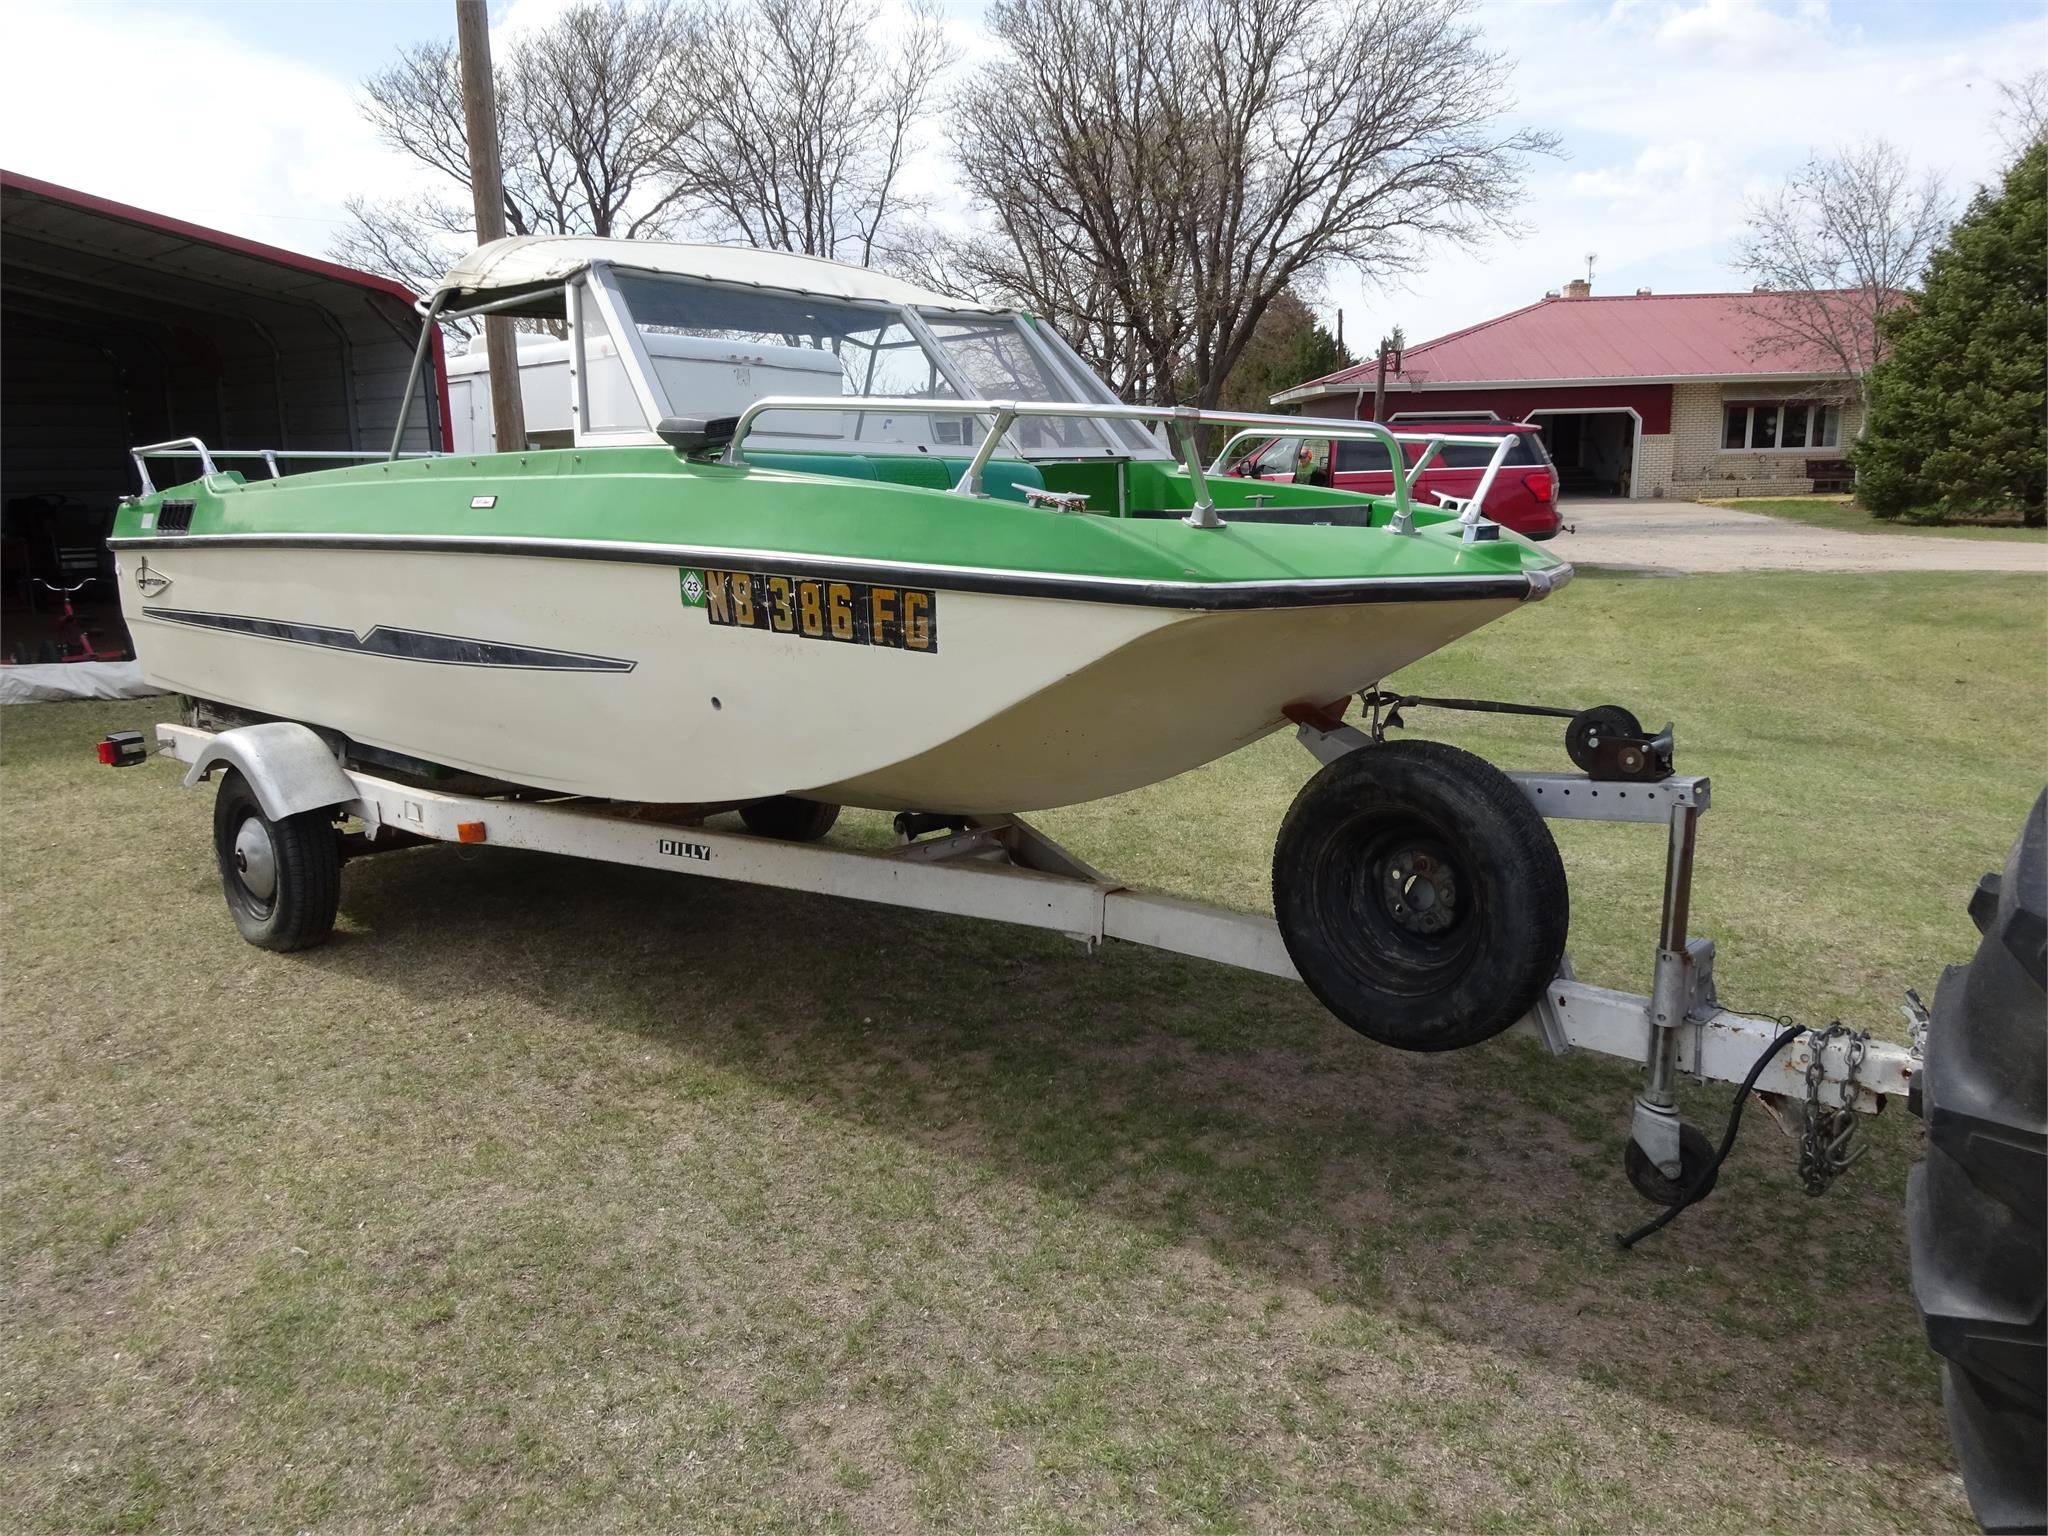 Boats for sale in Naponee, Nebraska, Facebook Marketplace